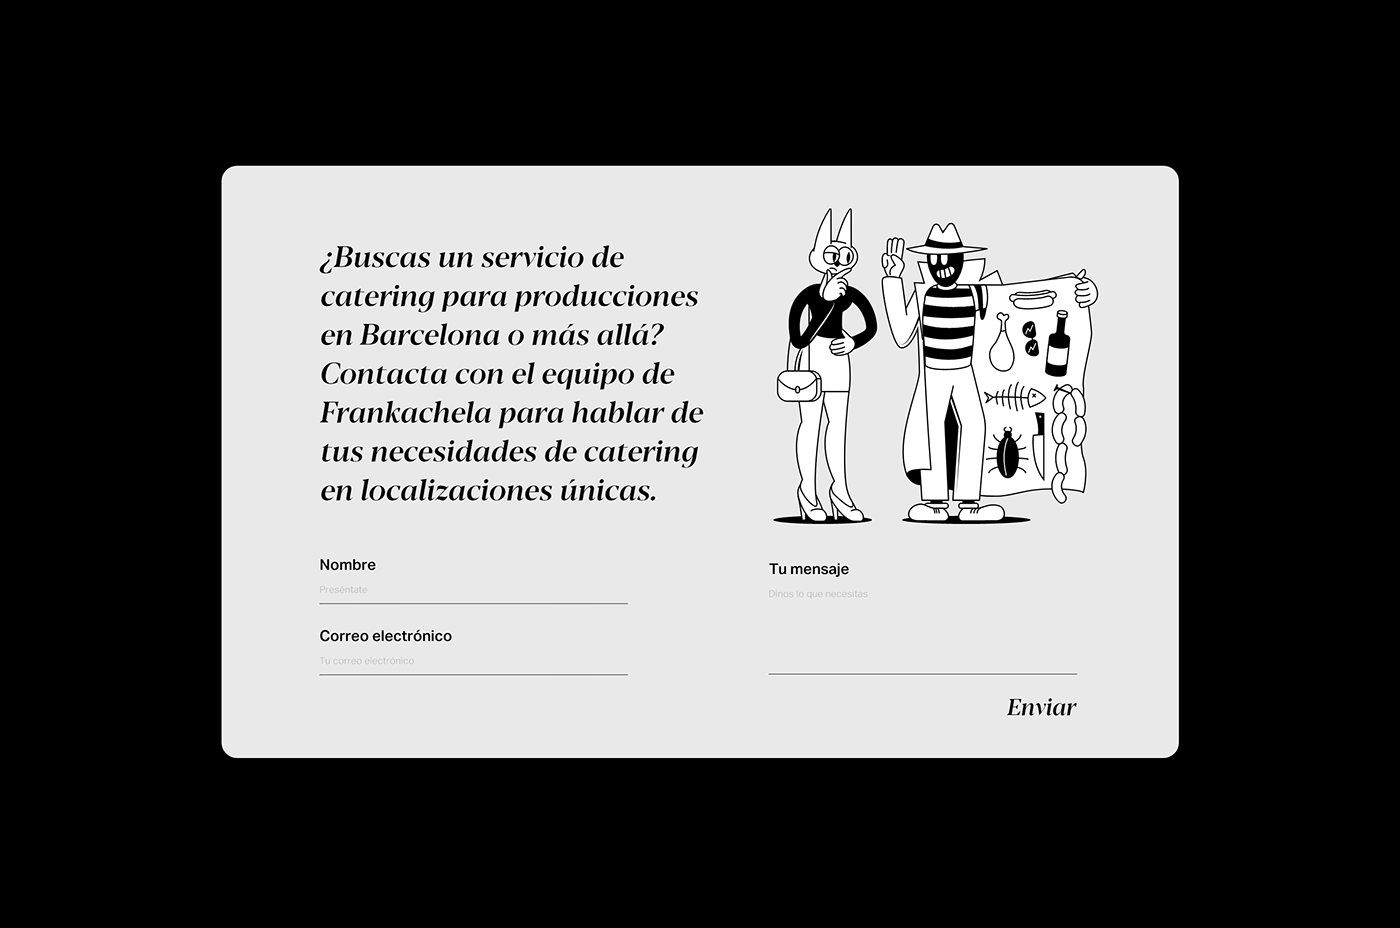 cartoon catering cuisine dark humor Logotype visual identity service barcelona craft